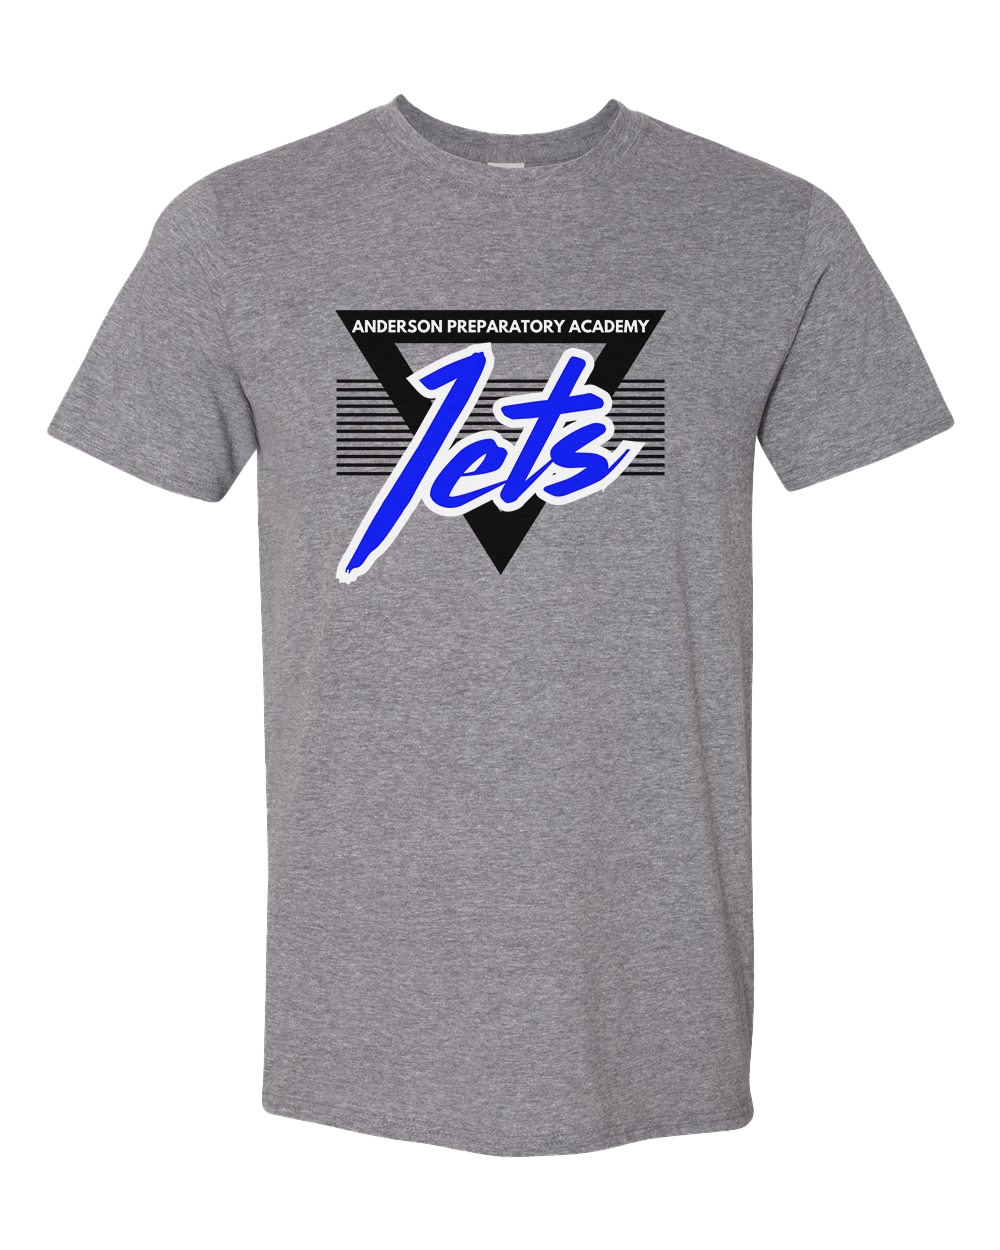 Retro Anderson Preparatory Academy Jets Tshirt - Graphite Heater